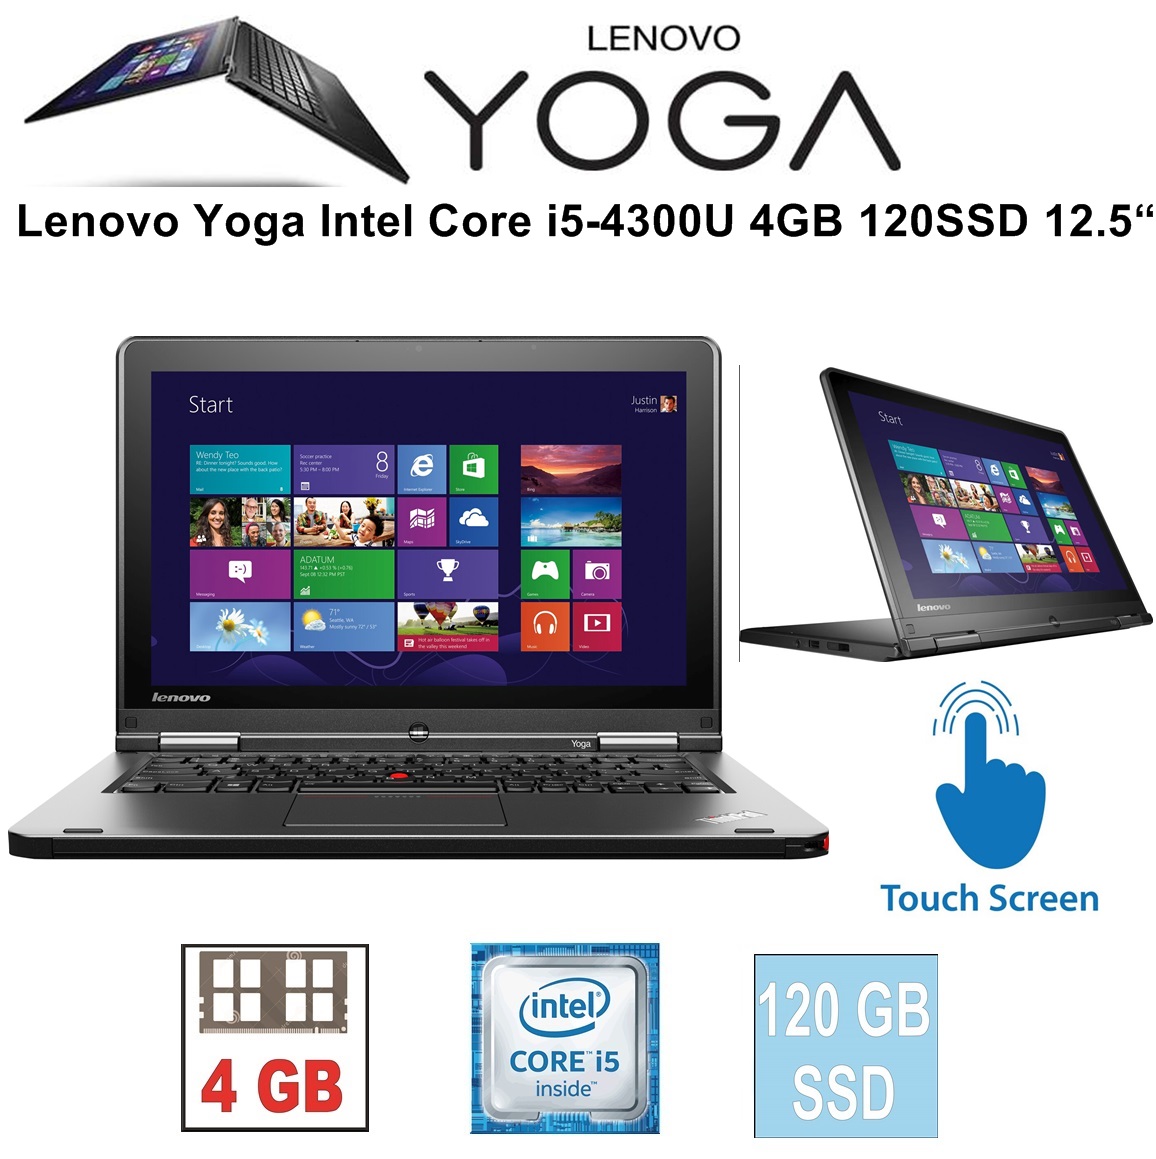 Lenovo Yoga Intel Core i5-4300U/4GB/120SSD/12.5“